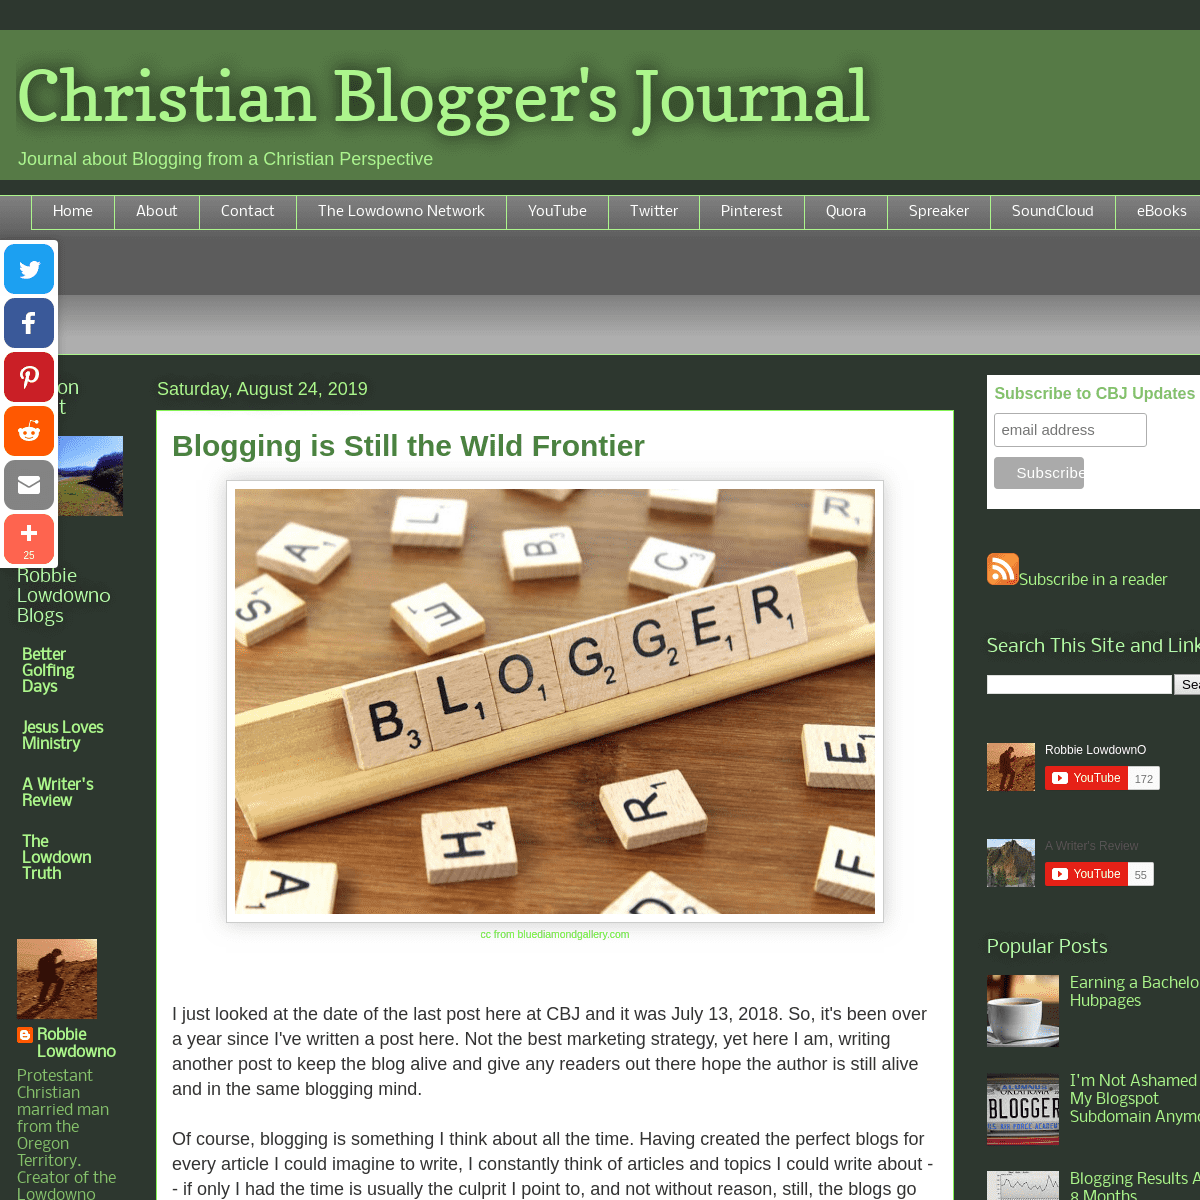 A complete backup of christianbloggersjournal.blogspot.com